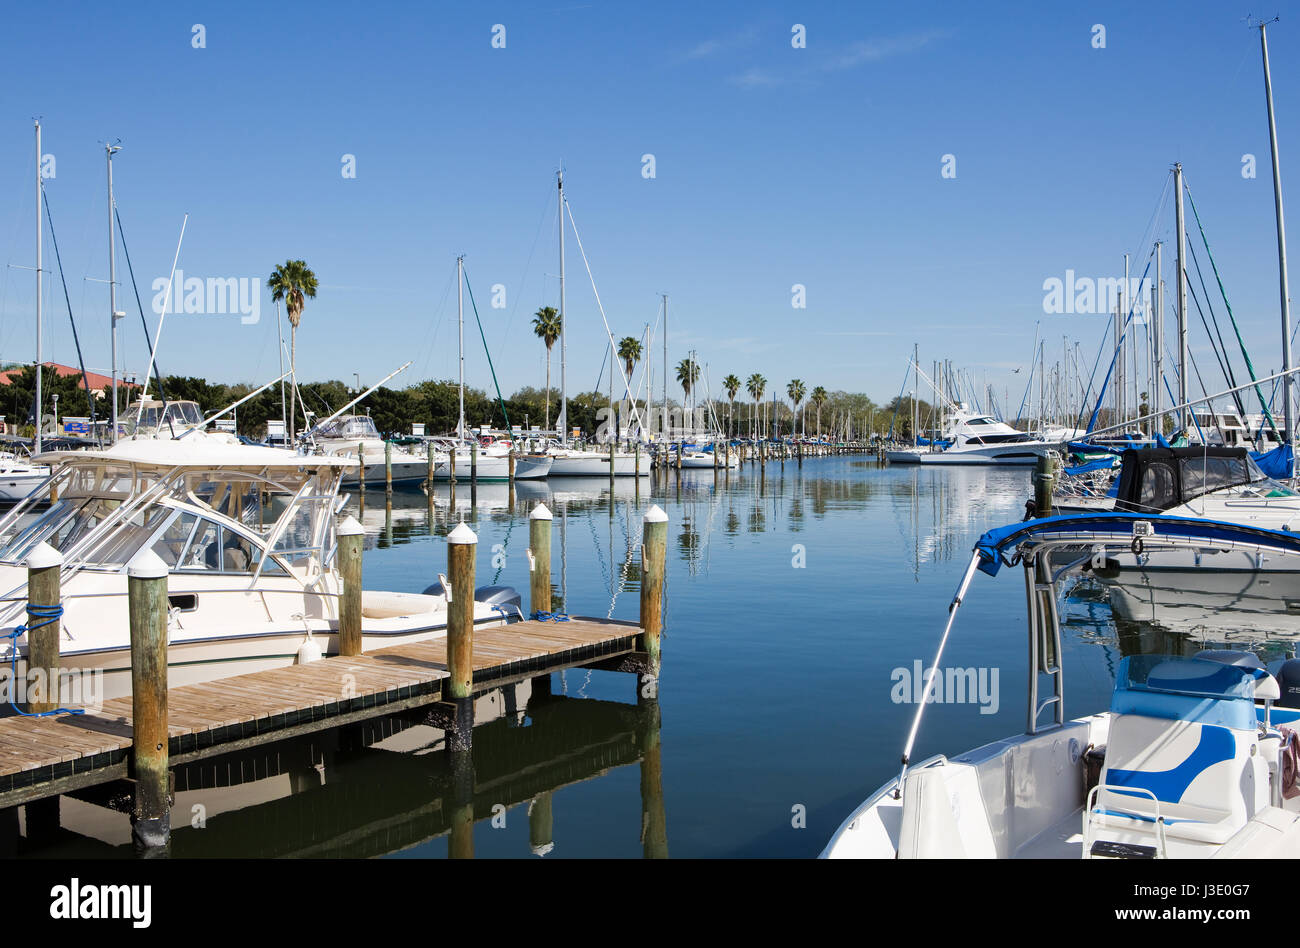 Yachts and sailboats are docked at the marina in St. Petersburg, Florida, USA. Stock Photo